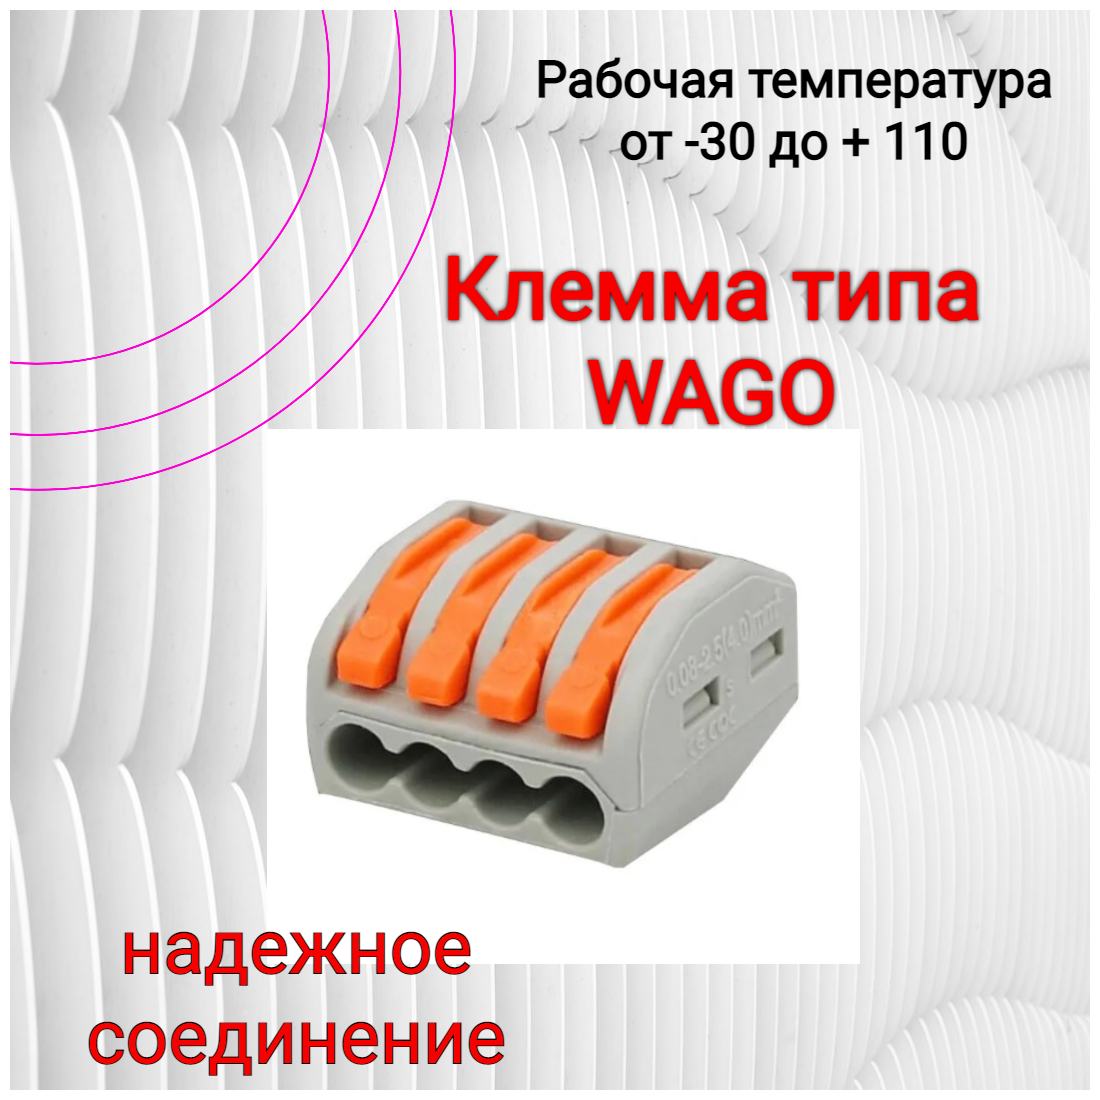 Клемма типа 414 (WAGO) 4 контакта многоразовая пружинная РСТ-214 2 шт